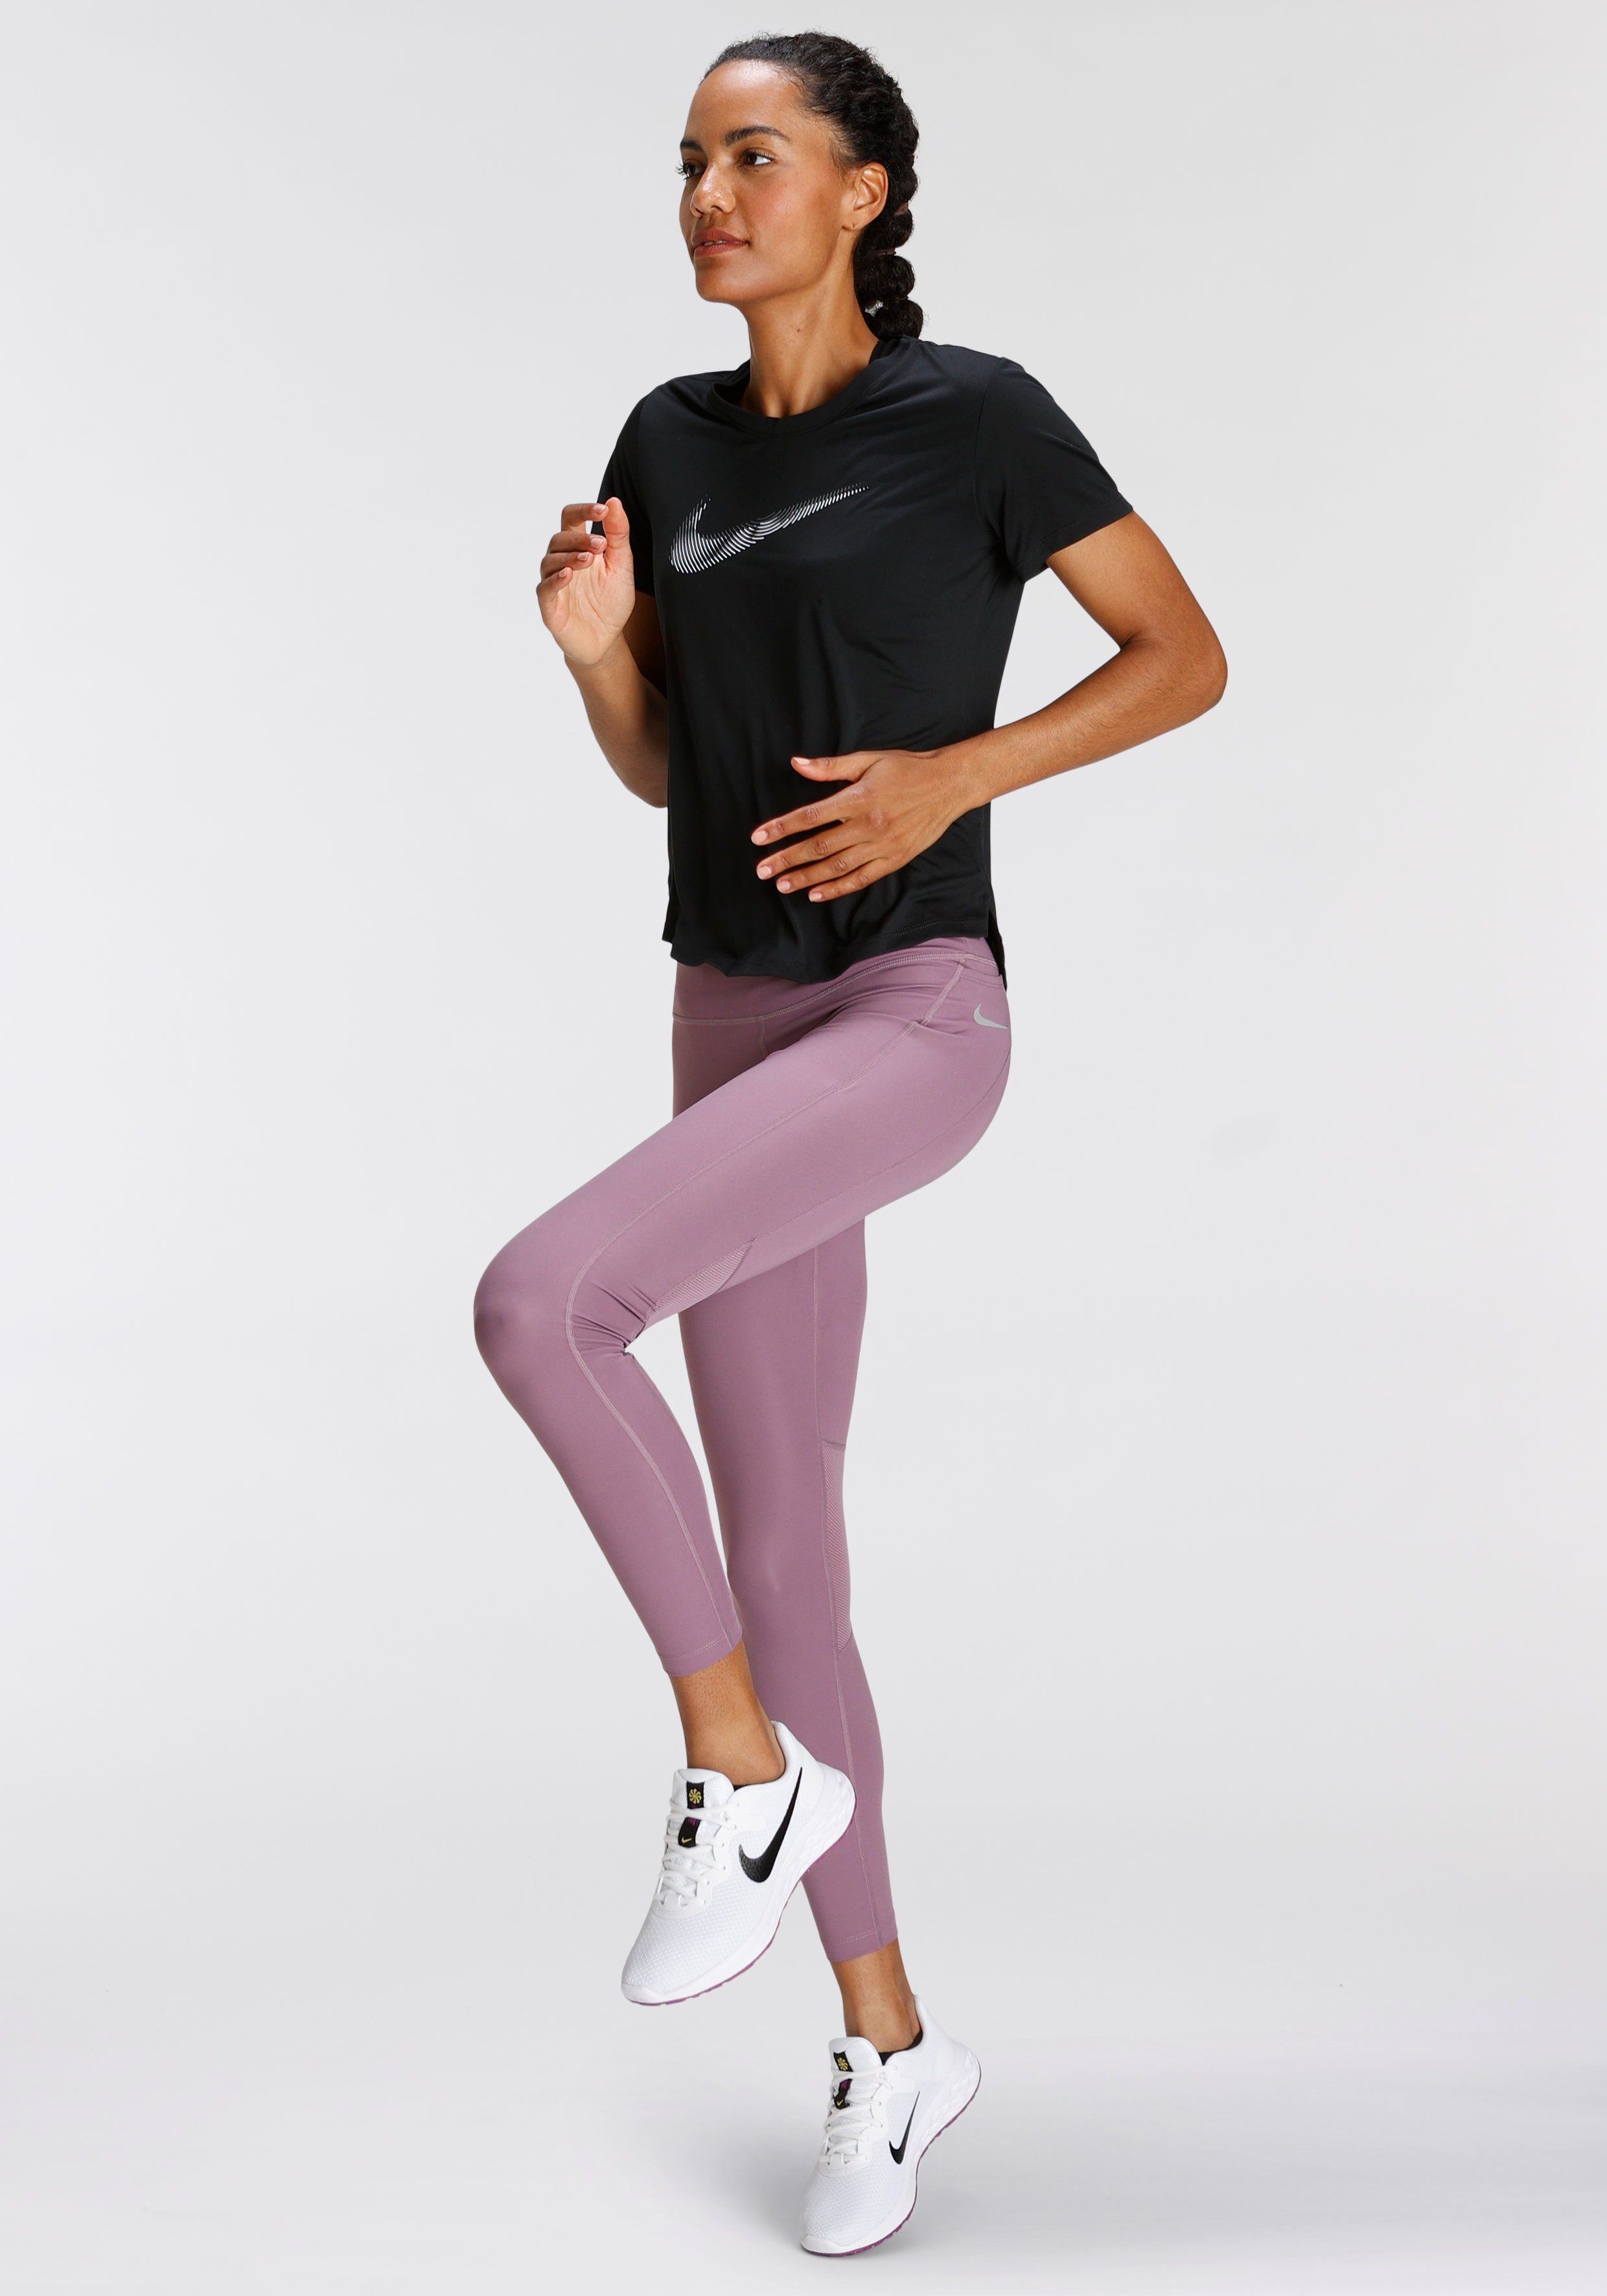 SWOOSH Laufshirt Nike RUNNING BLACK/COOL GREY TOP WOMEN'S SHORT-SLEEVE DRI-FIT